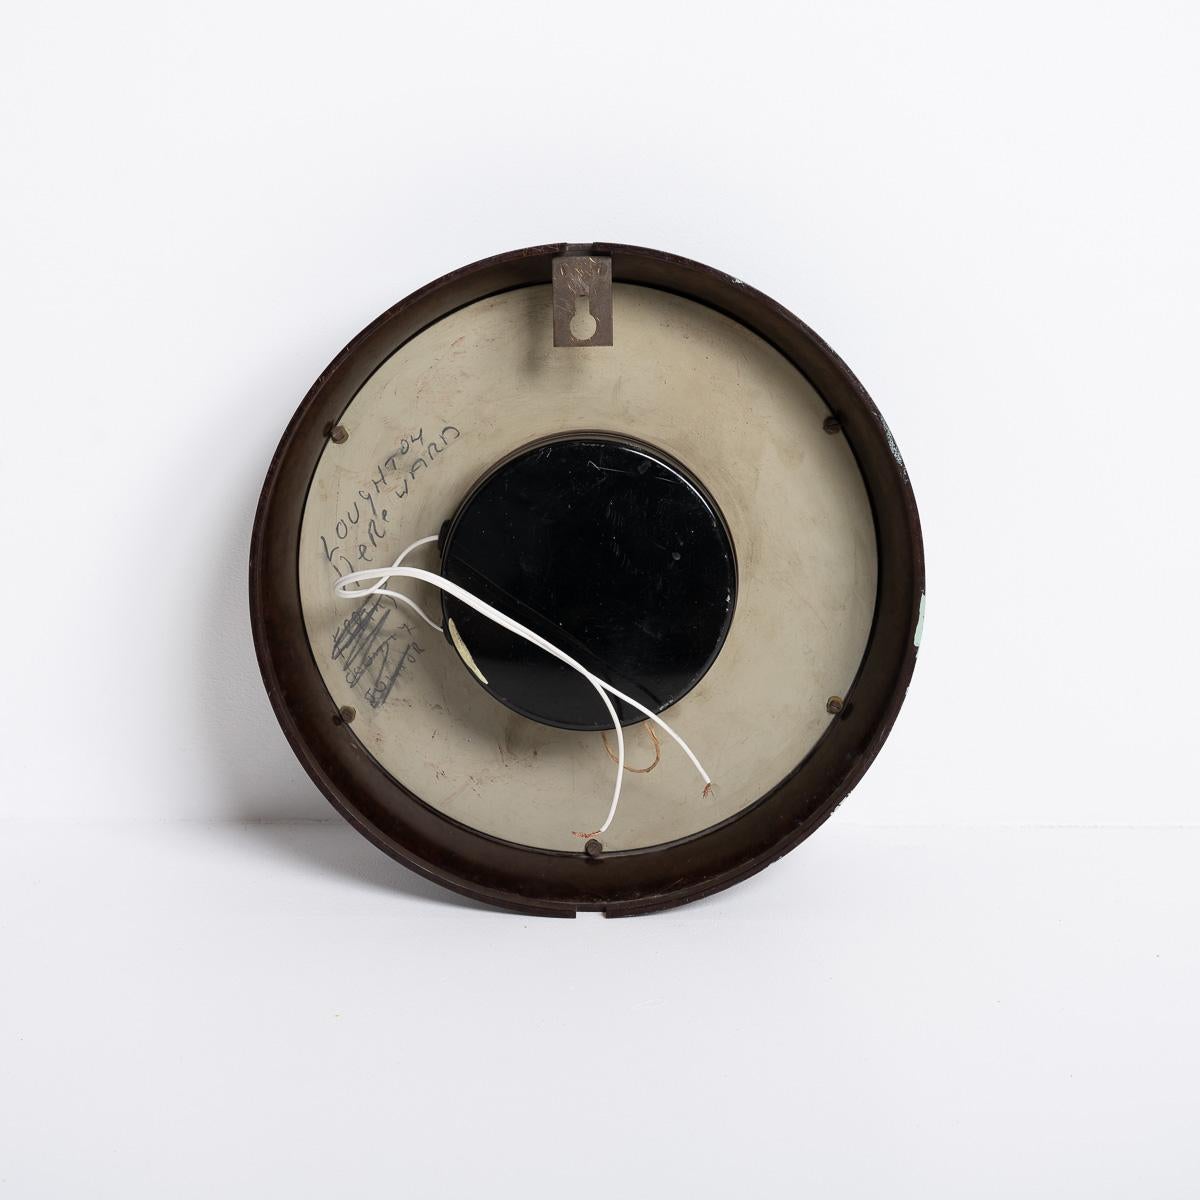 Synchronome Vintage Industrial Slave Clock In Bakelite Case For Sale 2